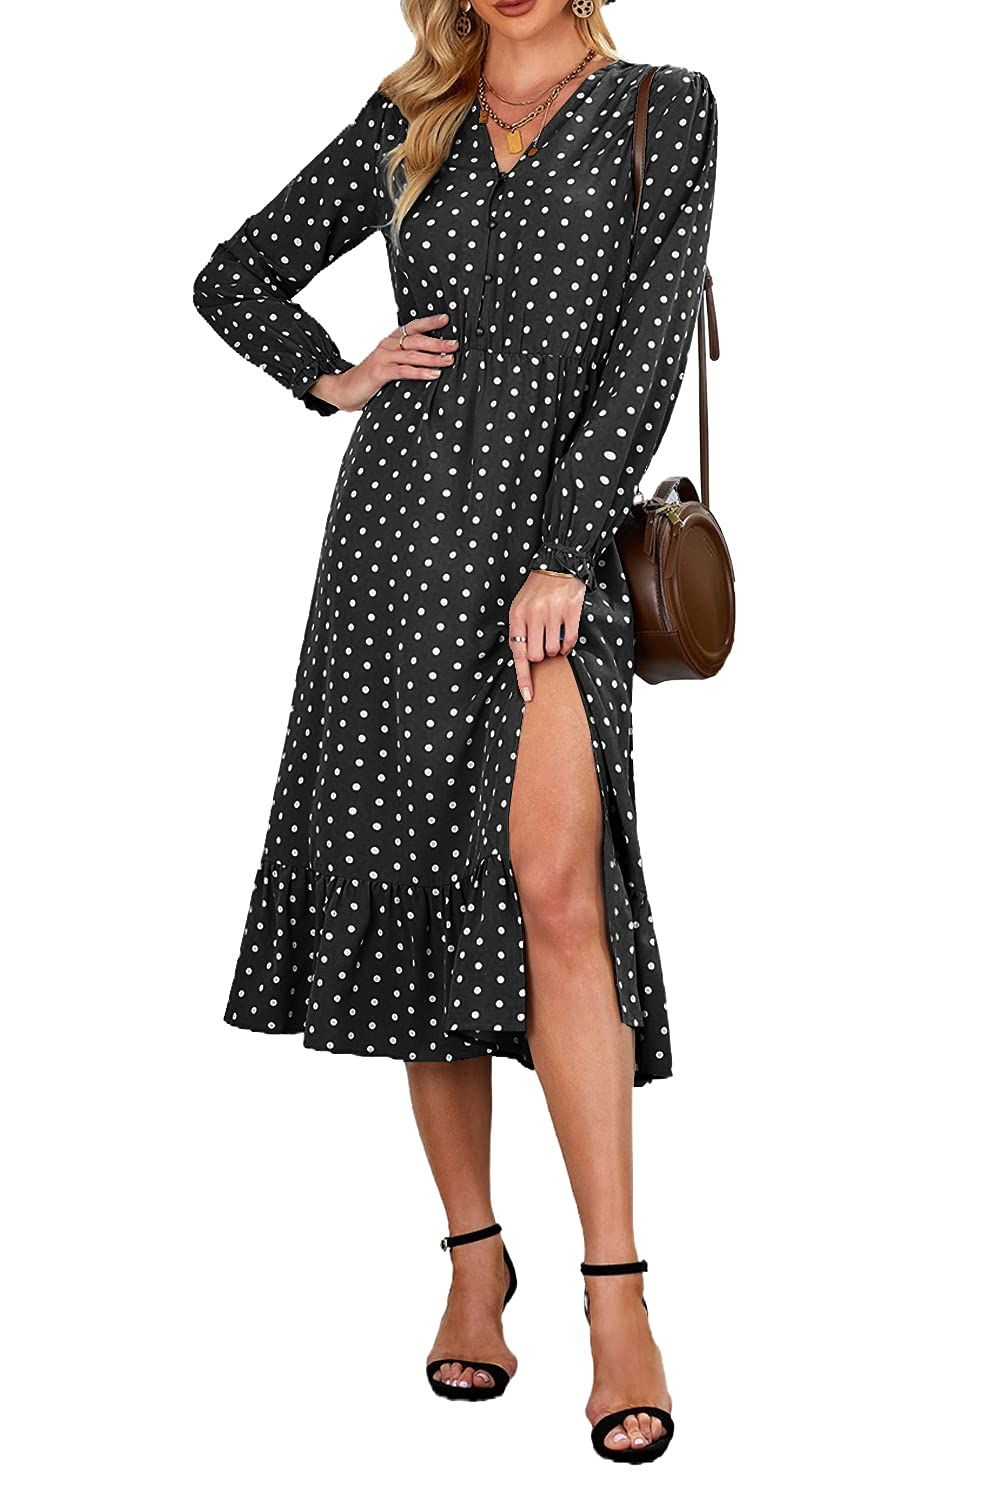 PRETTYGARDEN Women's Boho Long Sleeve Polka Dot V Neck Button Ruffle Midi Dress Flowy A-Line Side Sl | Amazon (US)